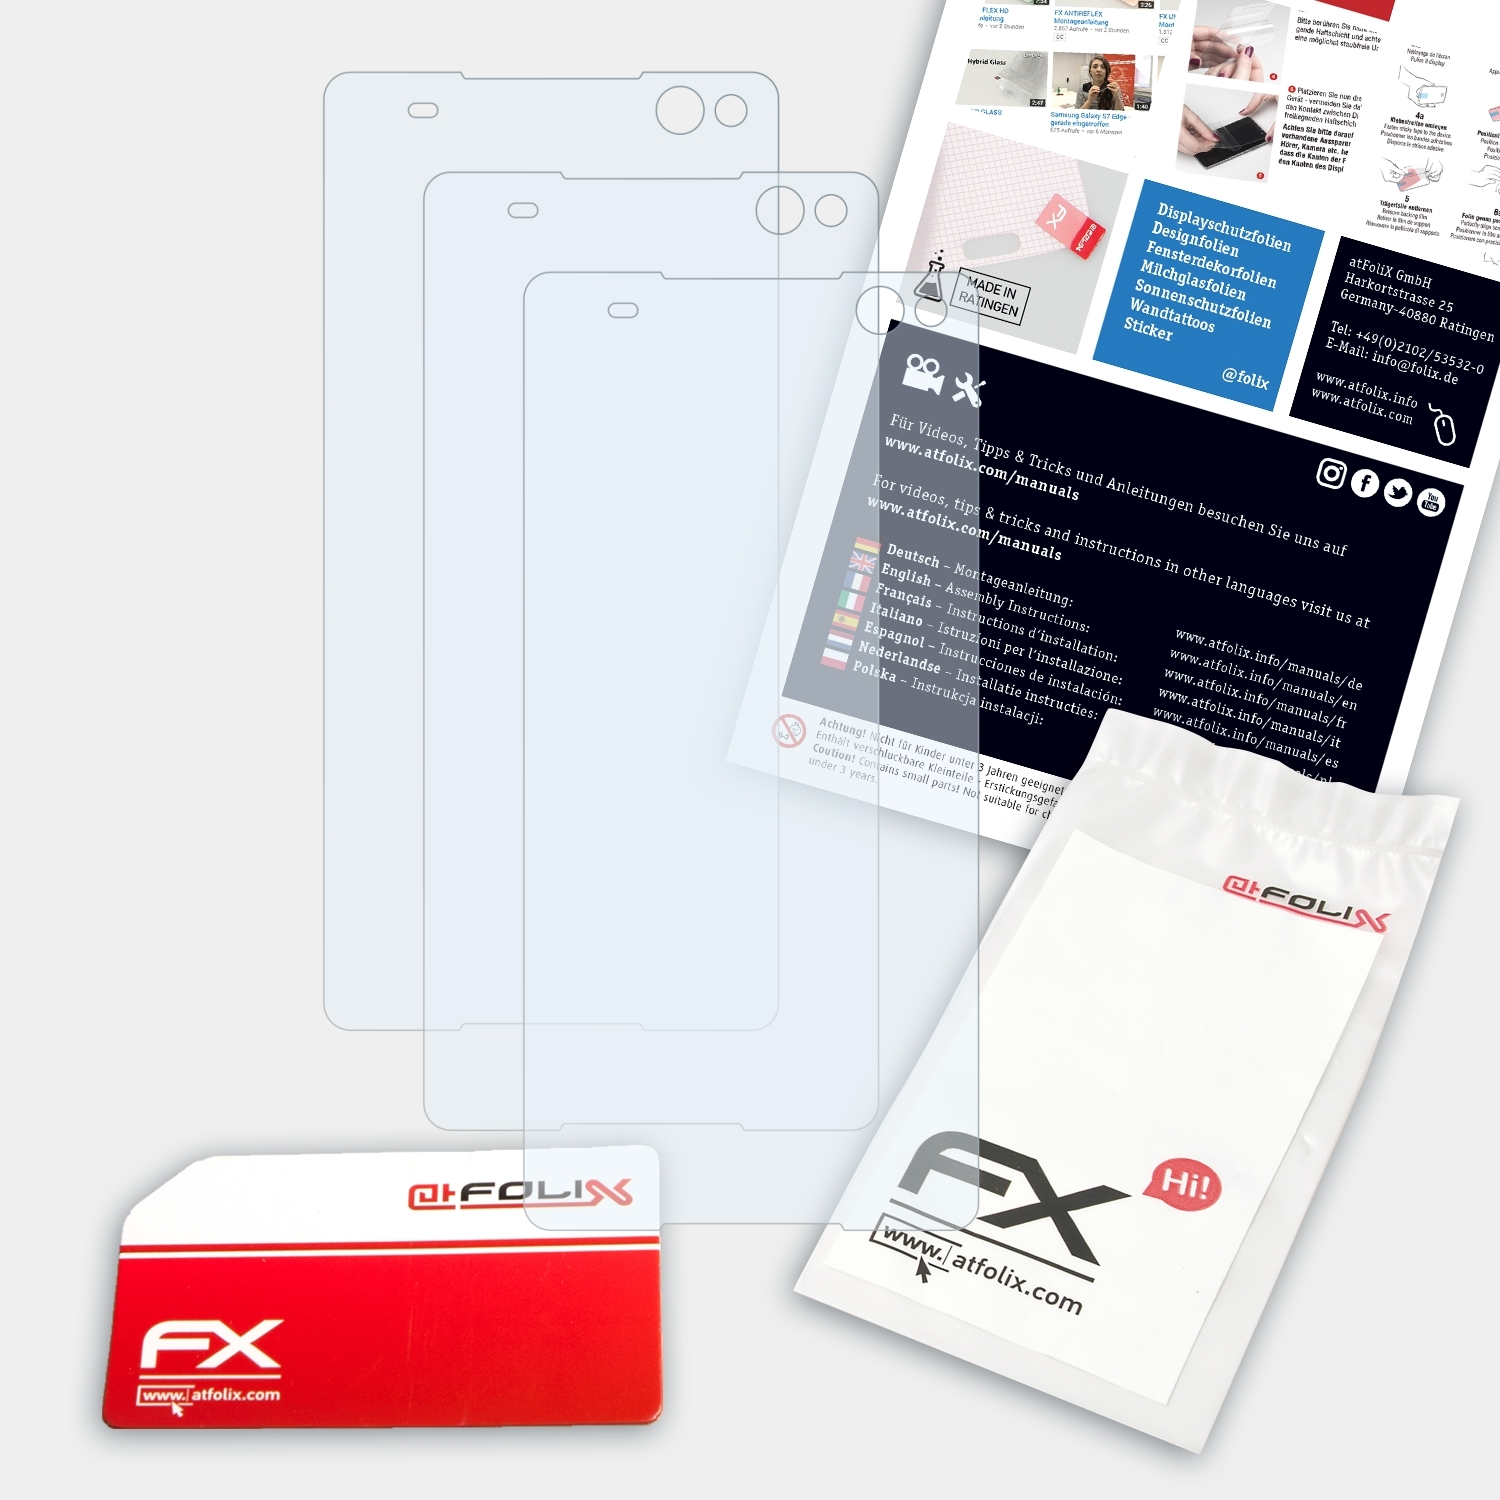 ATFOLIX 3x FX-Clear Displayschutz(für Sony C5 Ultra) Xperia